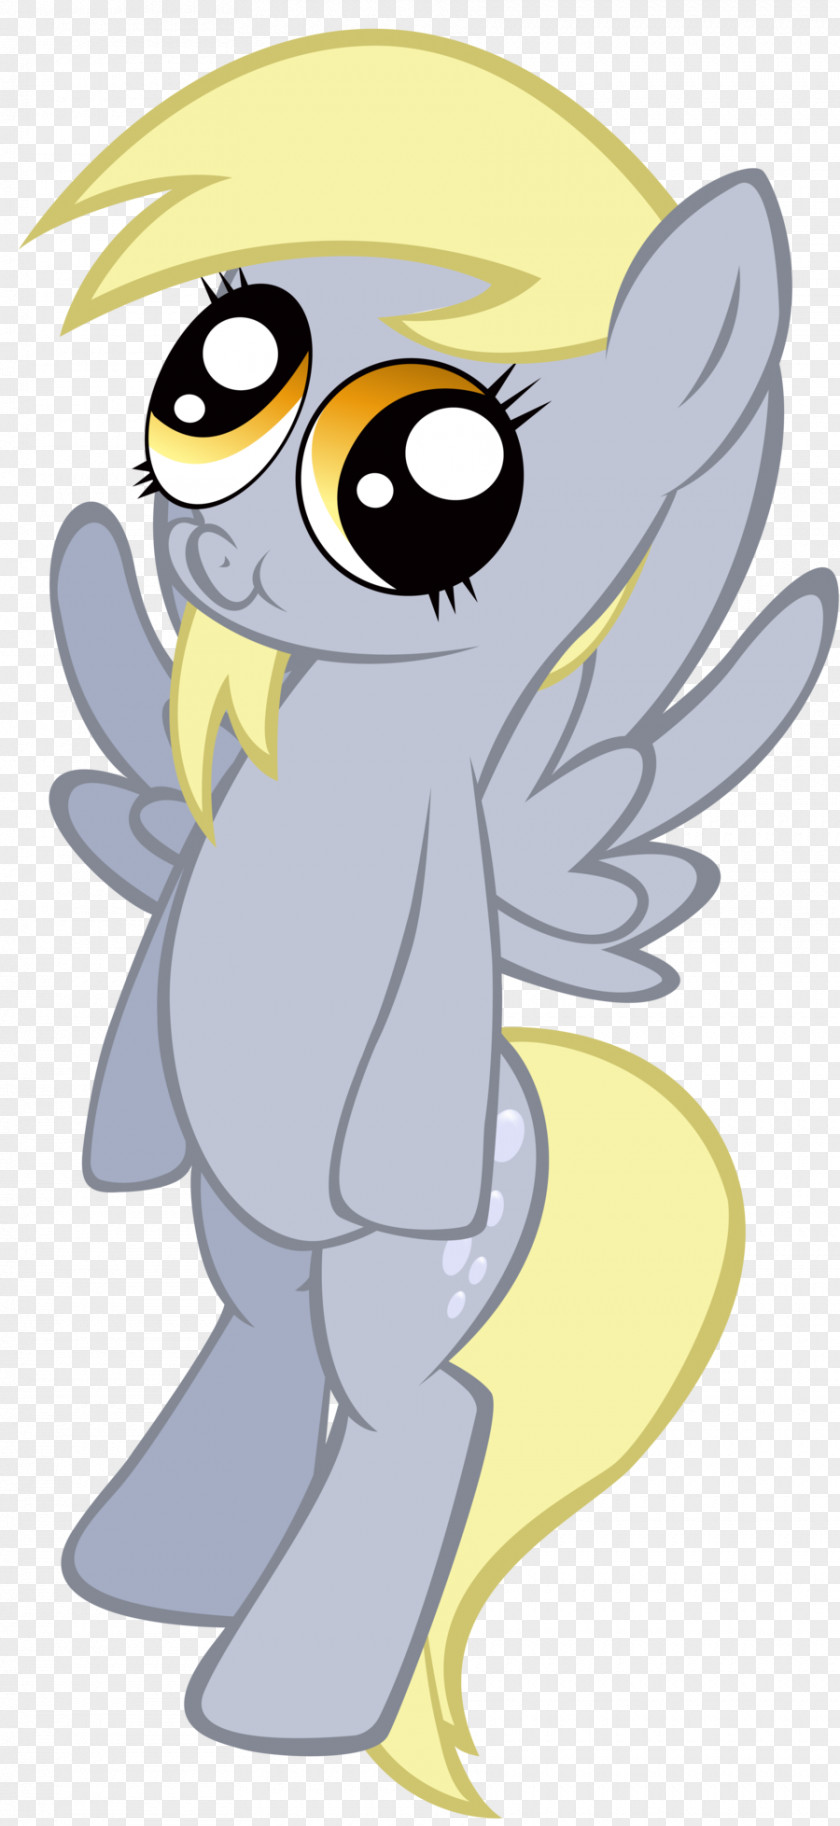 Derpy Hooves Twilight Sparkle Illustration Horse Pony Mammal PNG